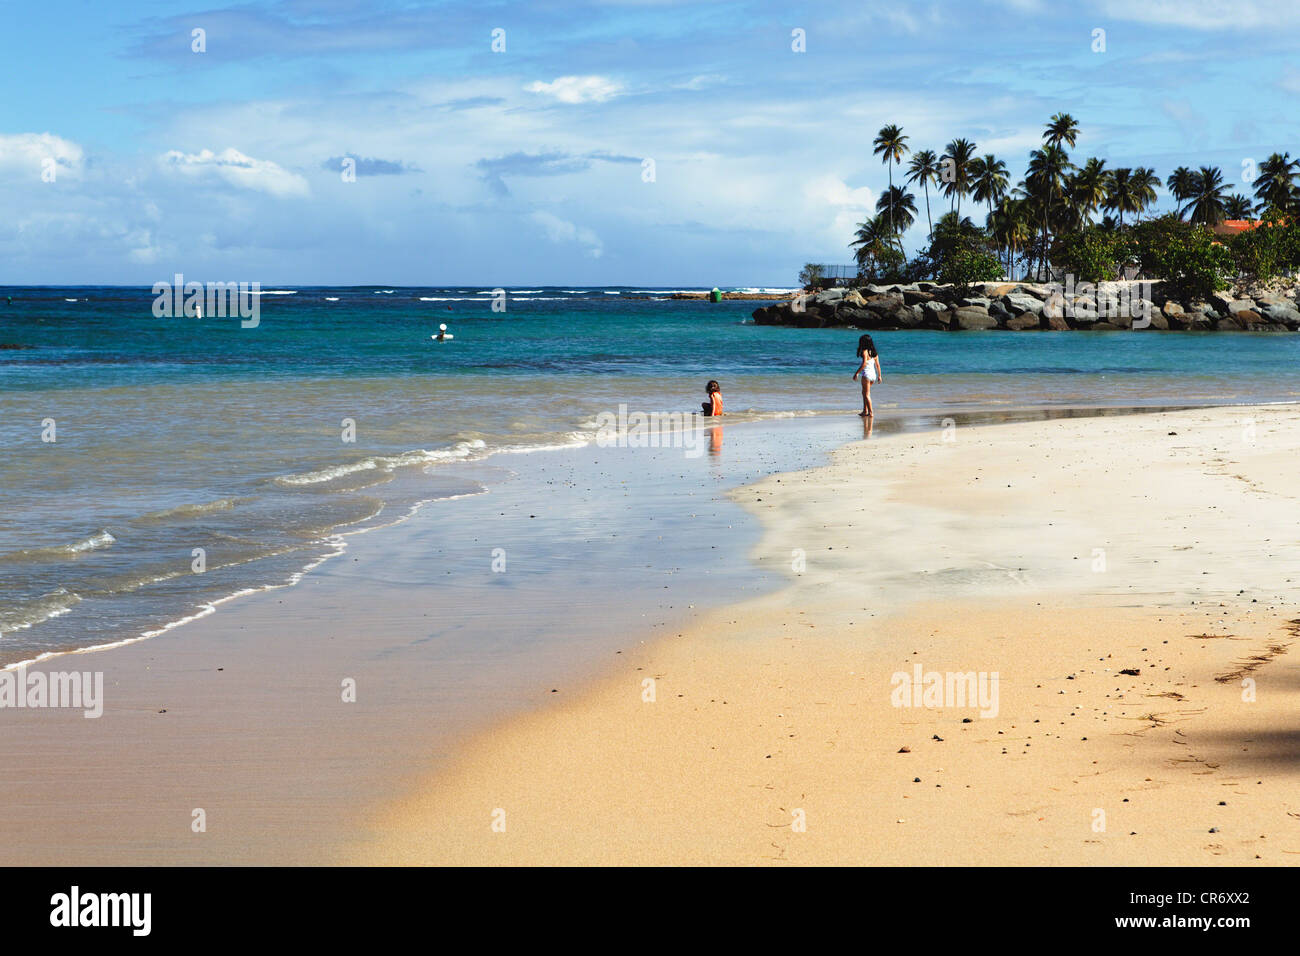 Dorado Puerto Rico High Resolution Stock Photography And Images Alamy